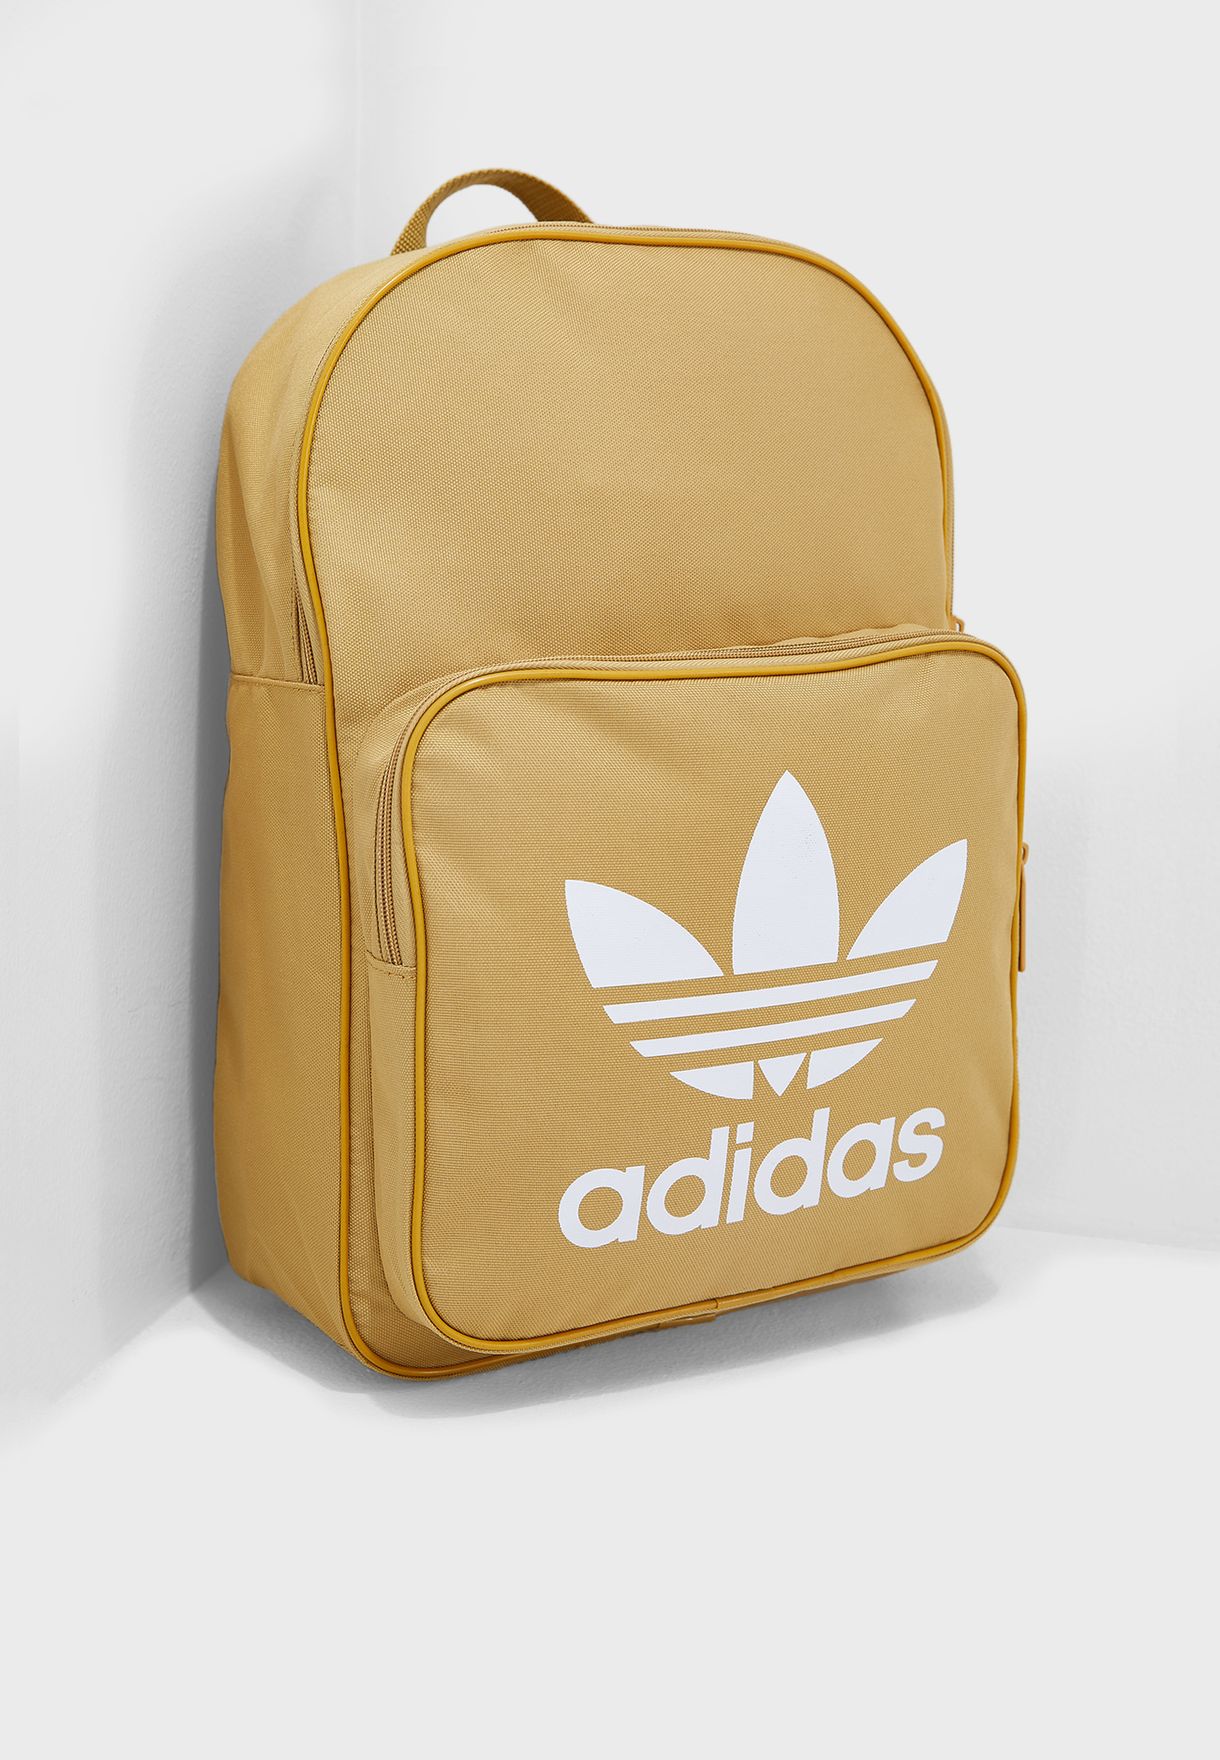 adidas original classic trefoil backpack